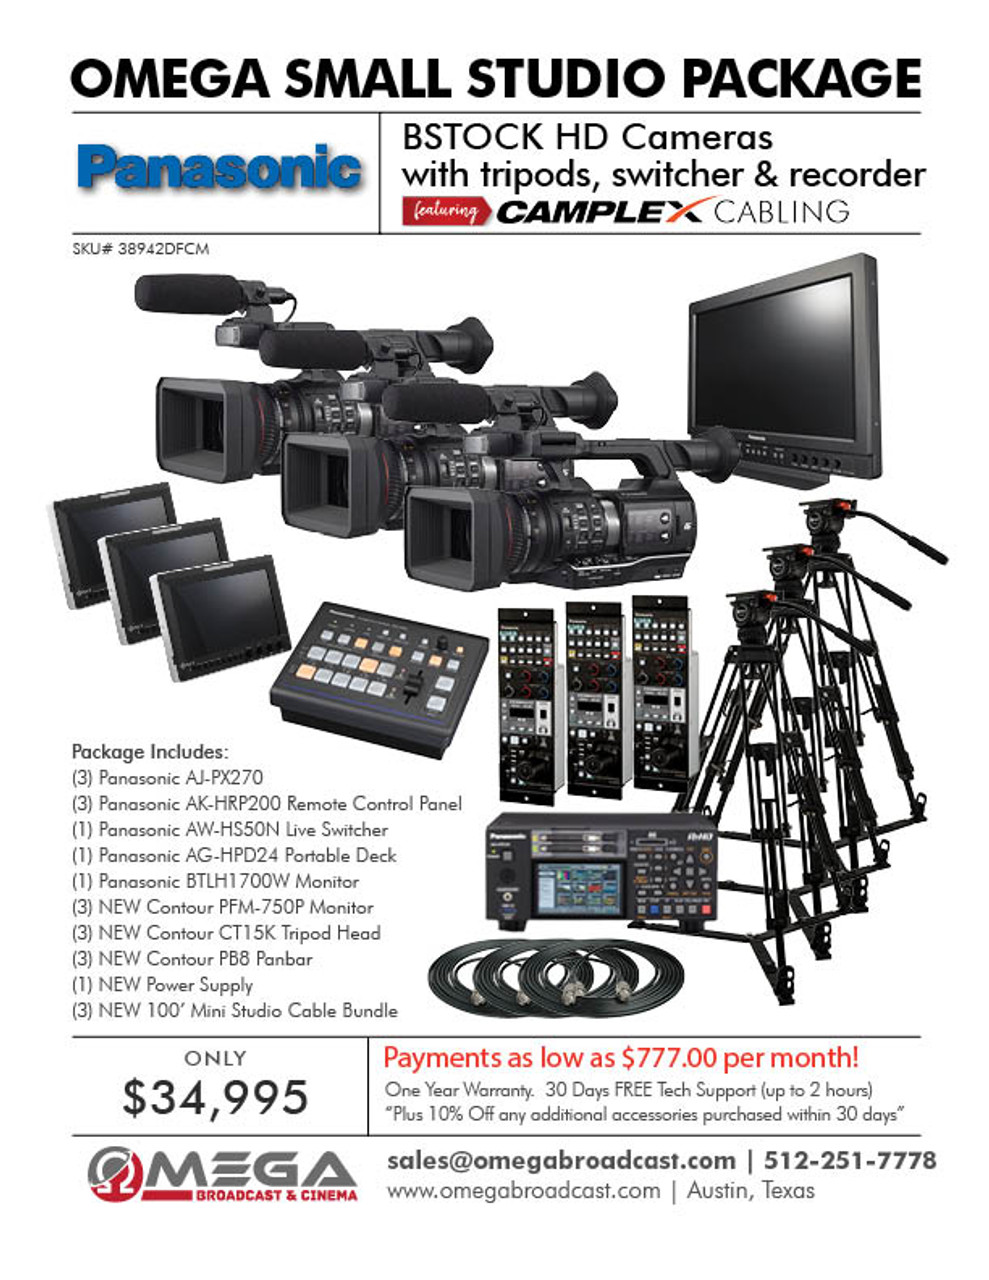 Panasonic BSTOCK HD Cameras